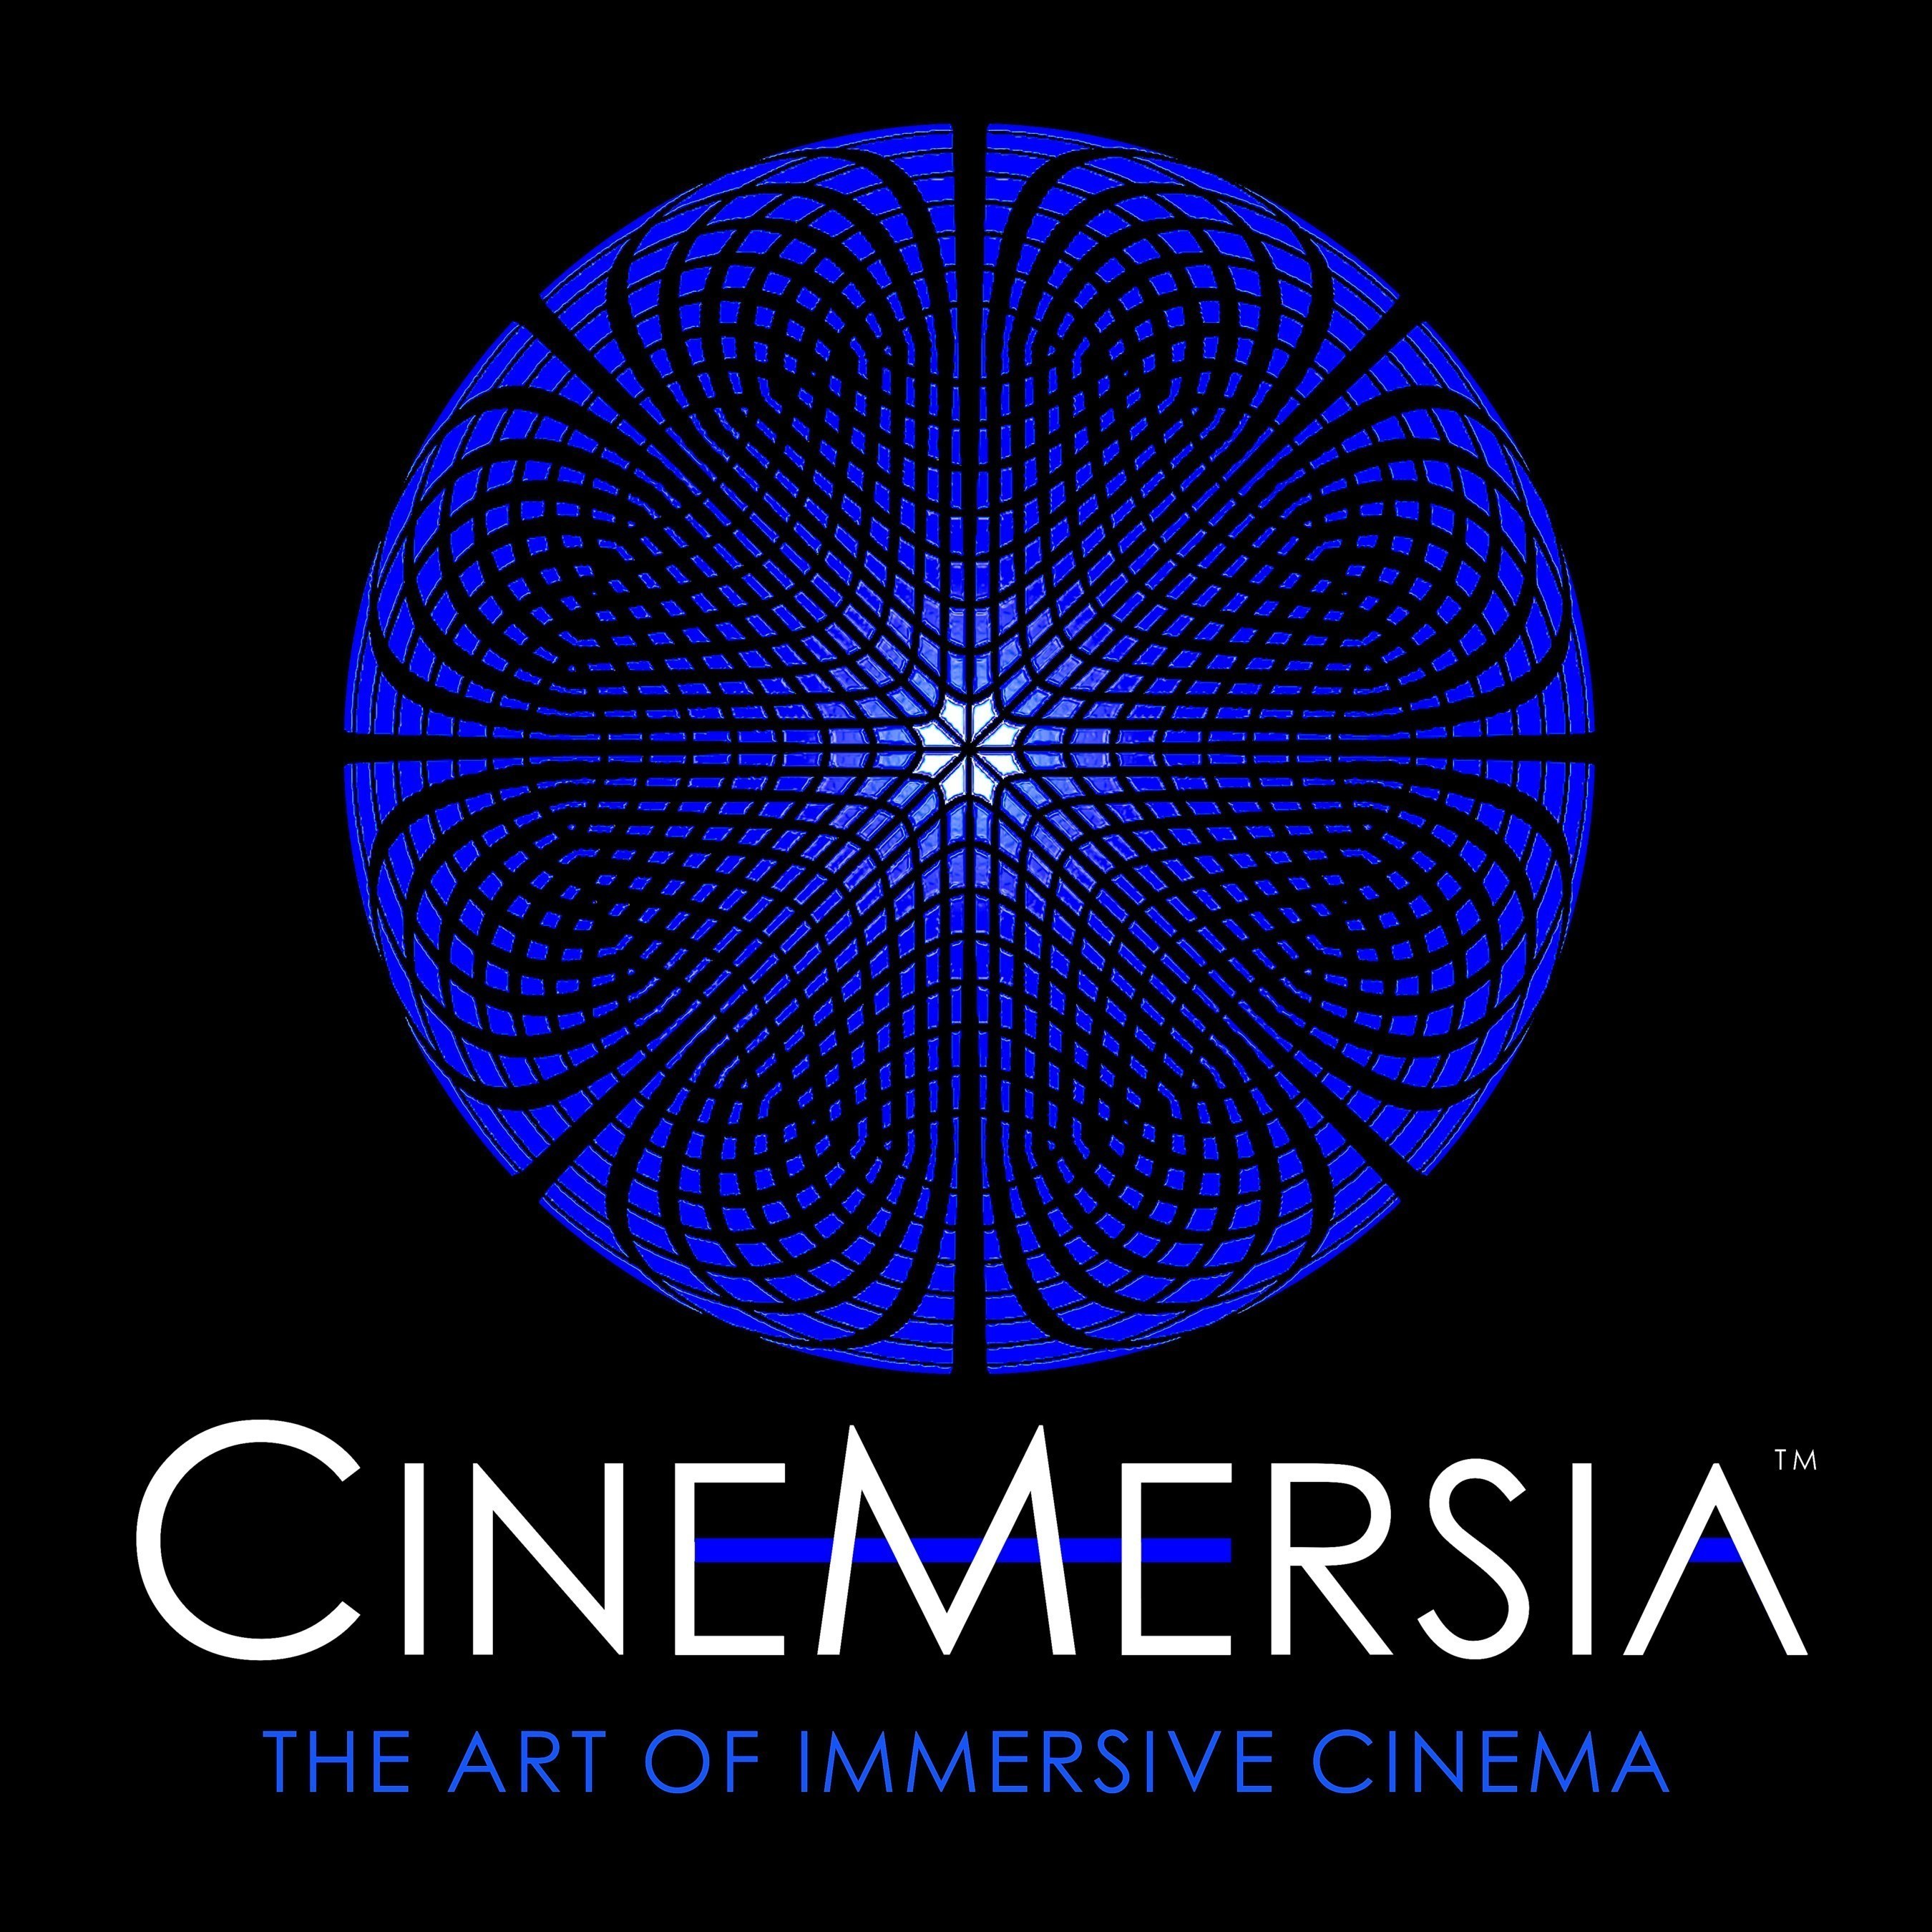 CINEMERSIA. The Art of Immersive Cinema